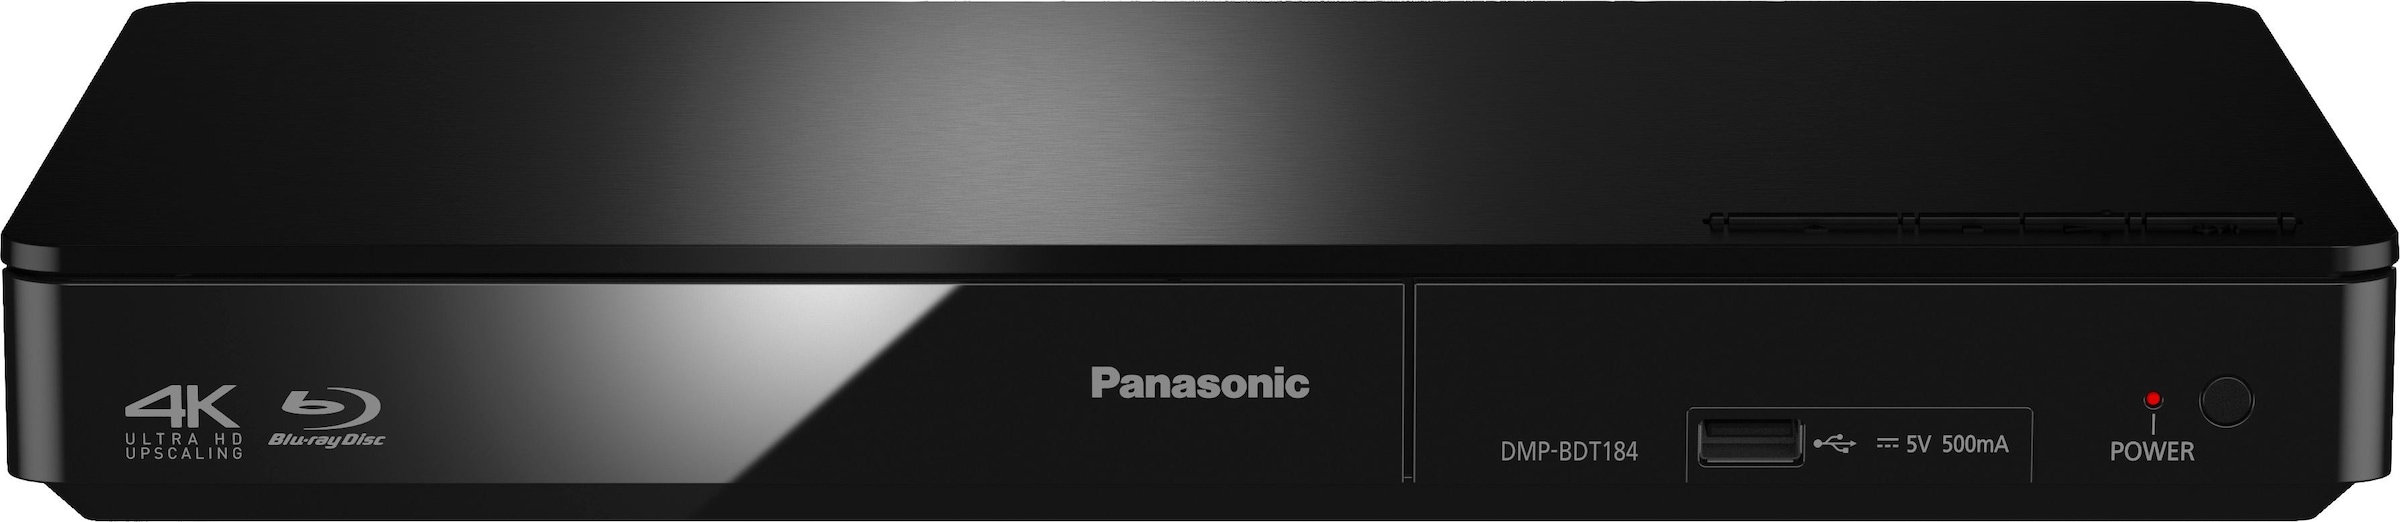 im DMP-BDT185«, LAN ❤ / (Ethernet), Upscaling-Schnellstart-Modus Blu-ray-Player 4K Jelmoli-Online Shop »DMP-BDT184 kaufen Panasonic